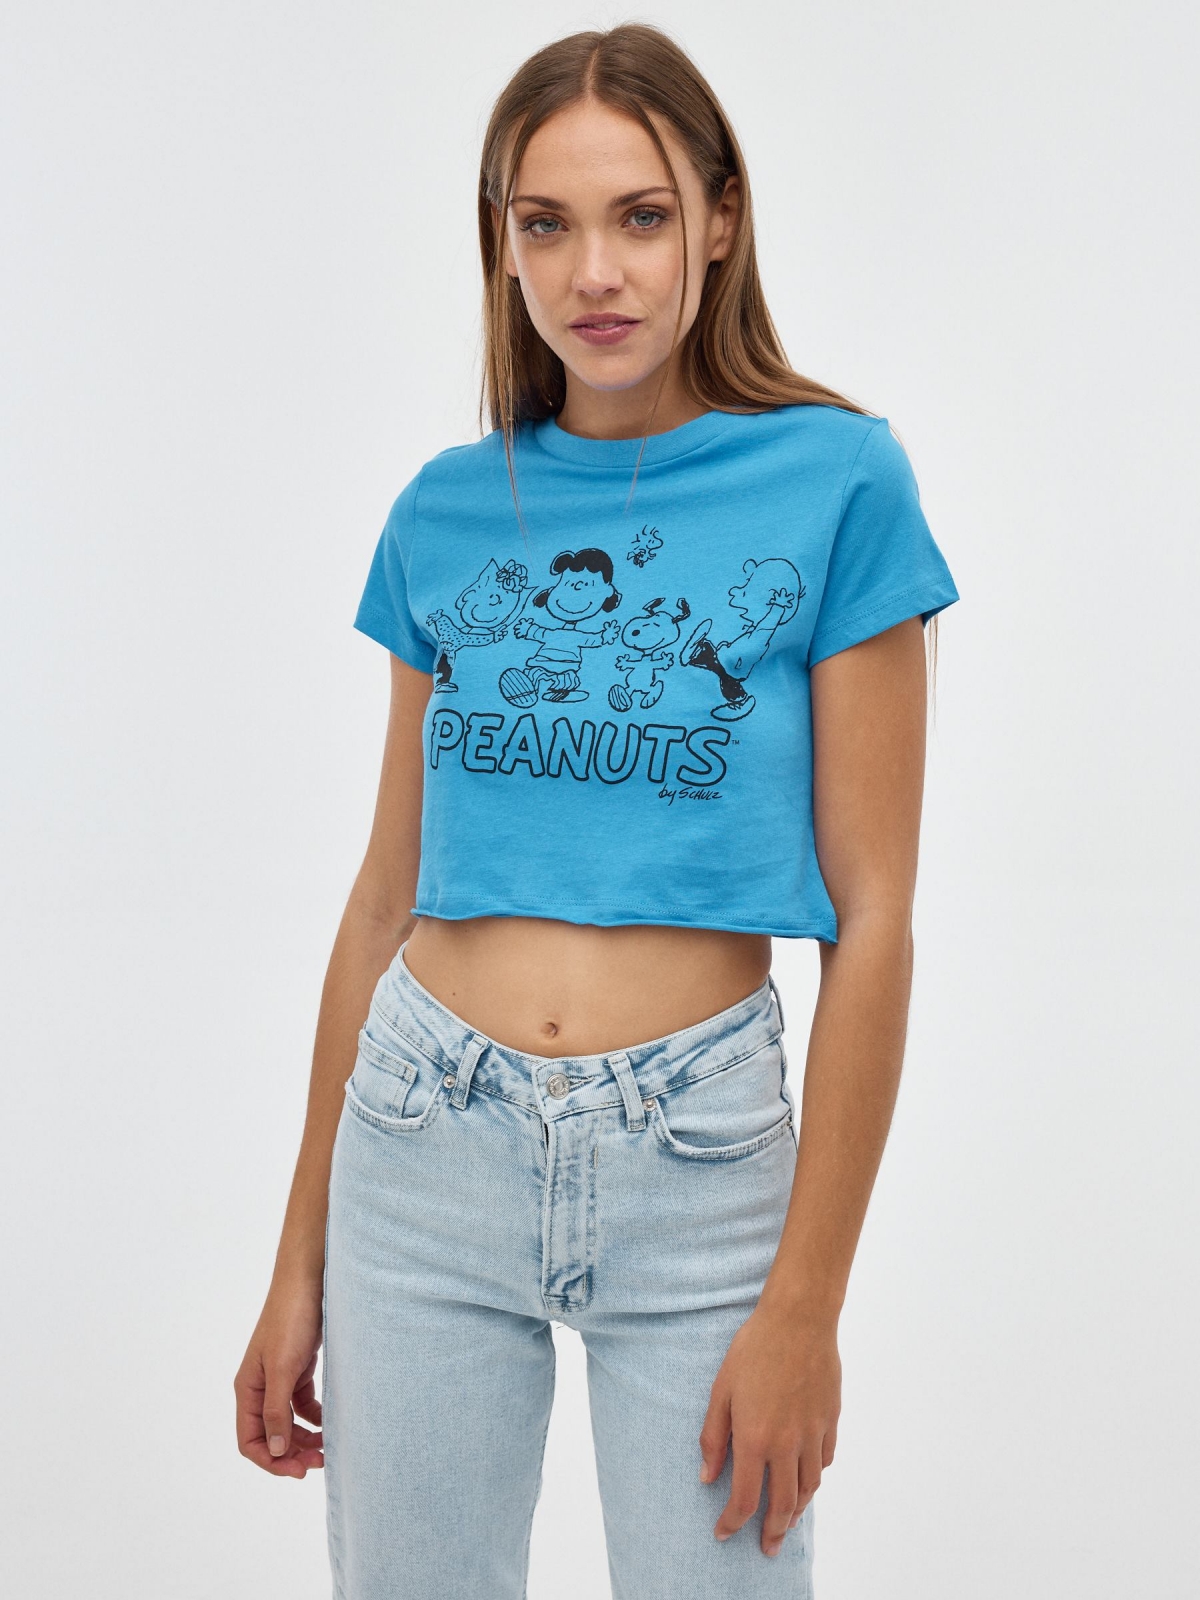 T-shirt Peanuts azul vista meia frontal